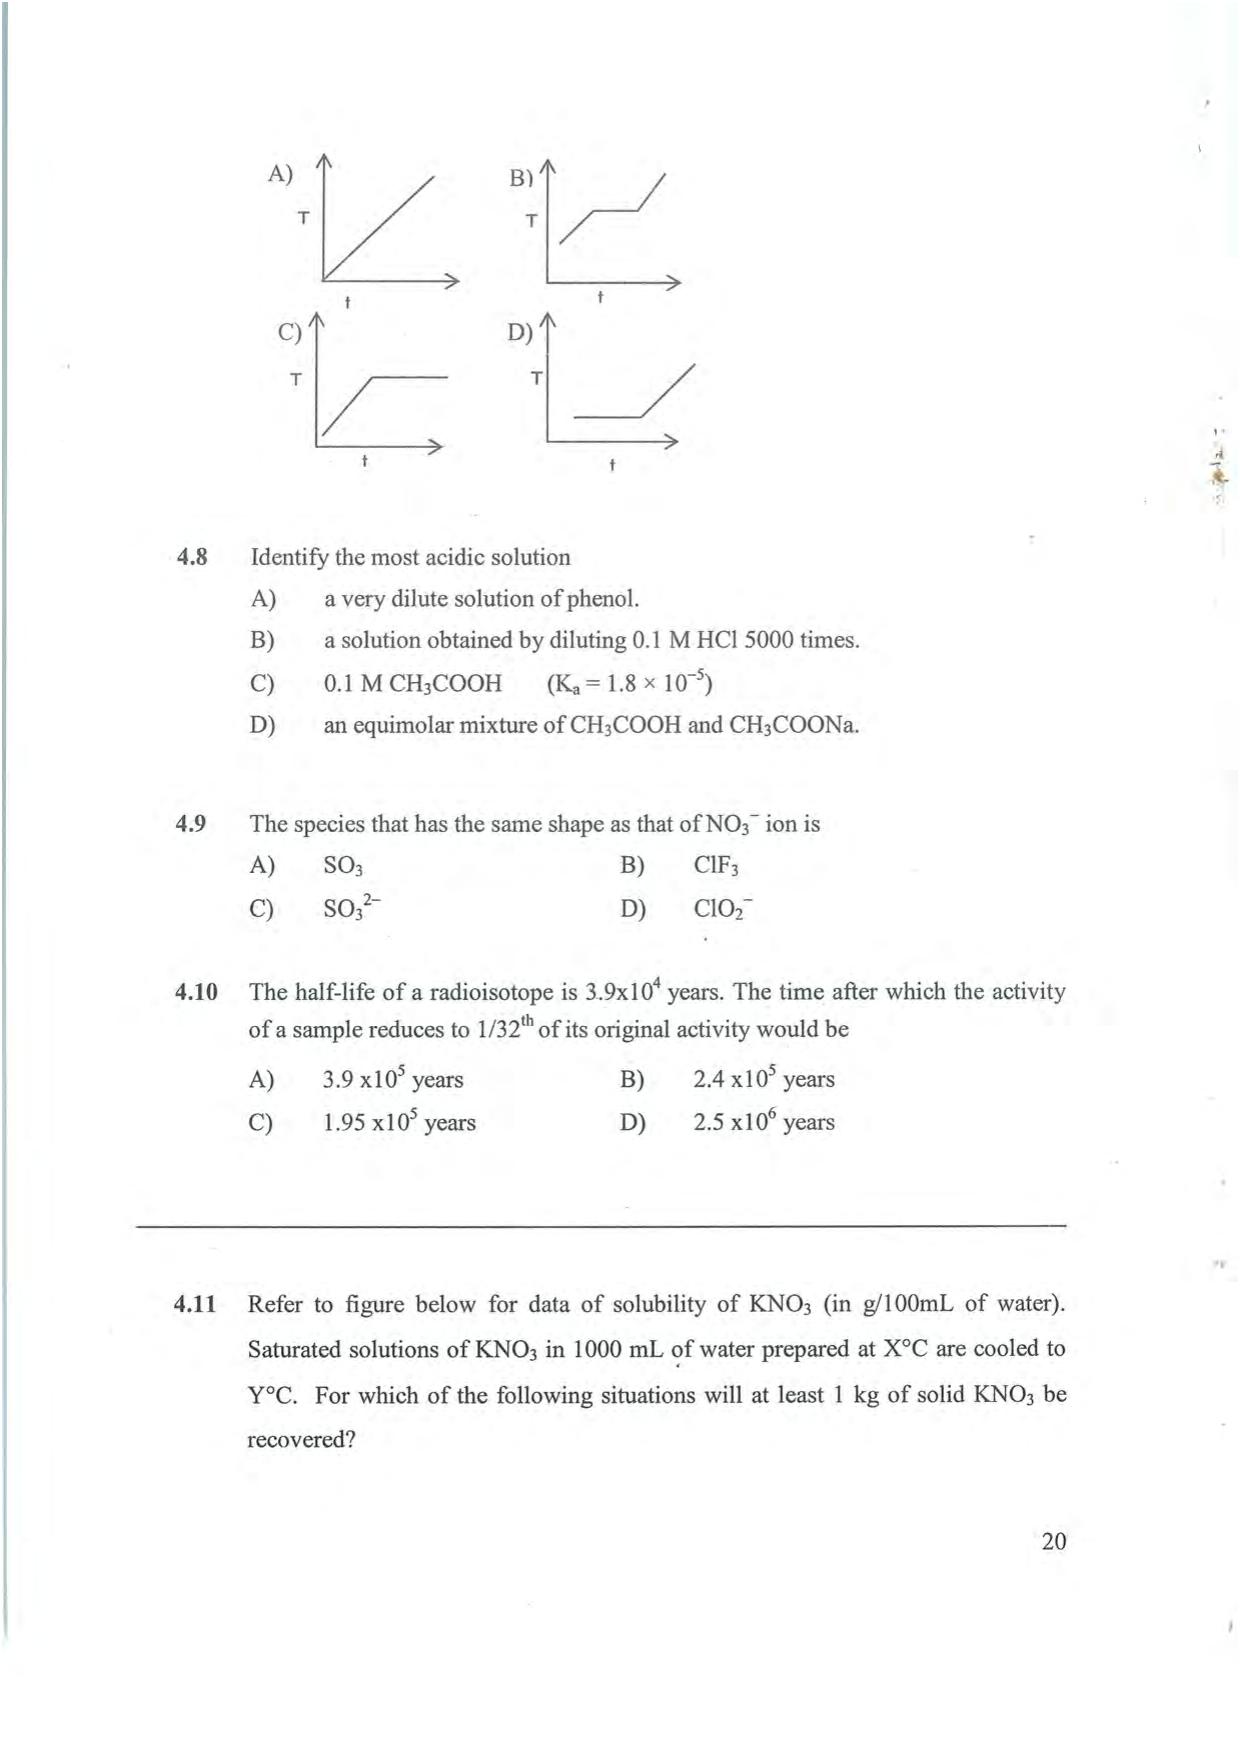 NEST 2008 Question Paper - Page 20